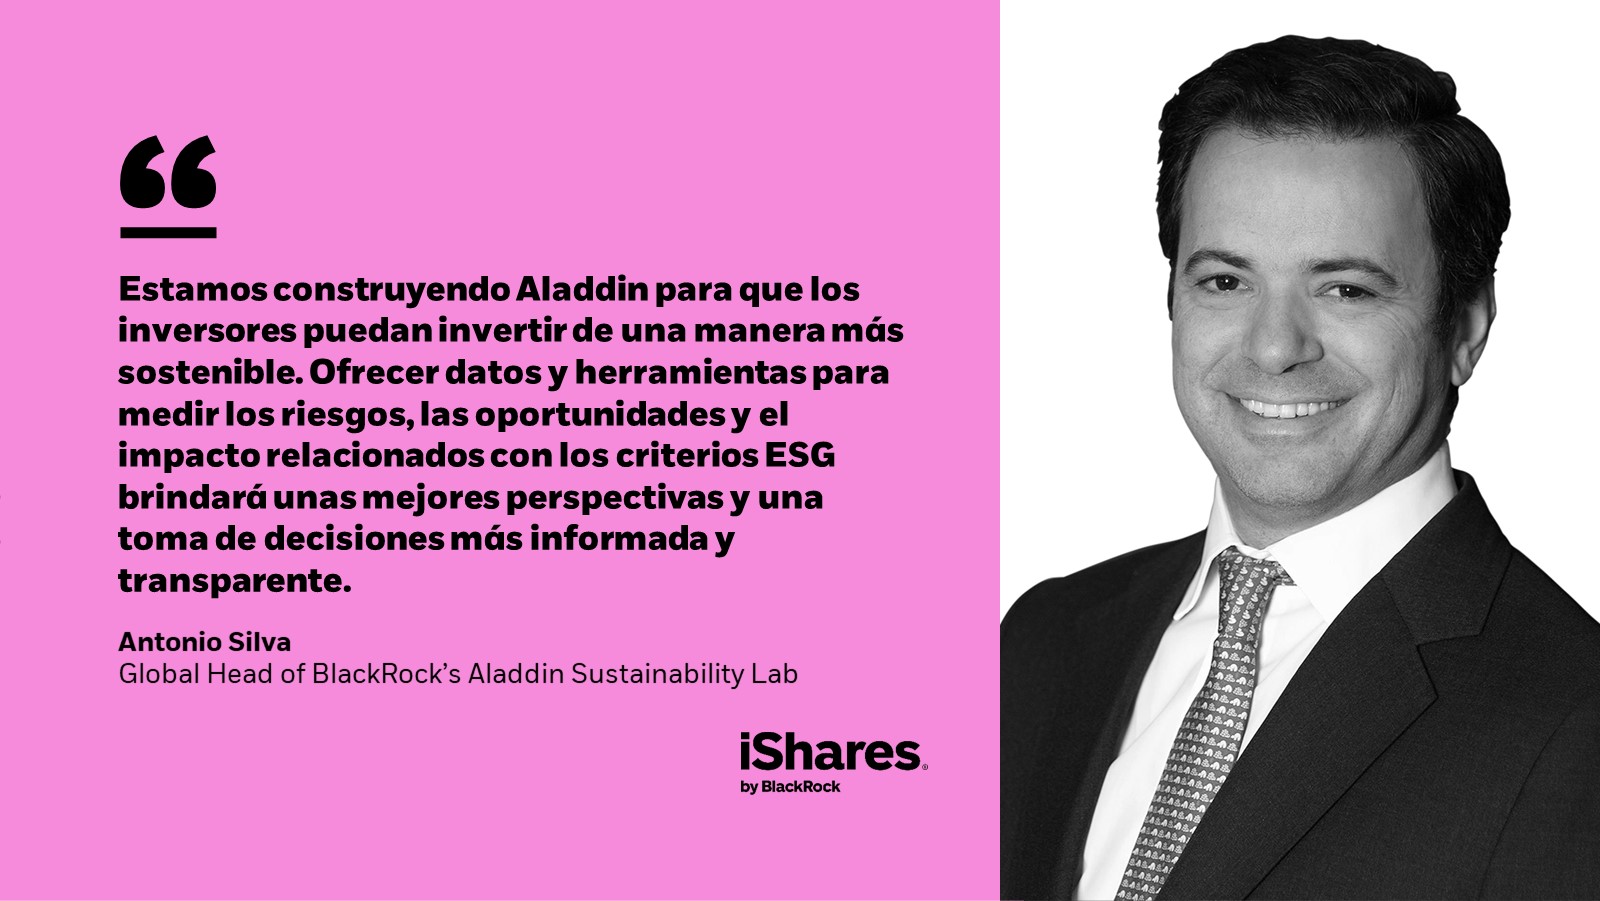 Antonio Silva, Global Head of BlackRock’s Aladdin Sustainability Lab